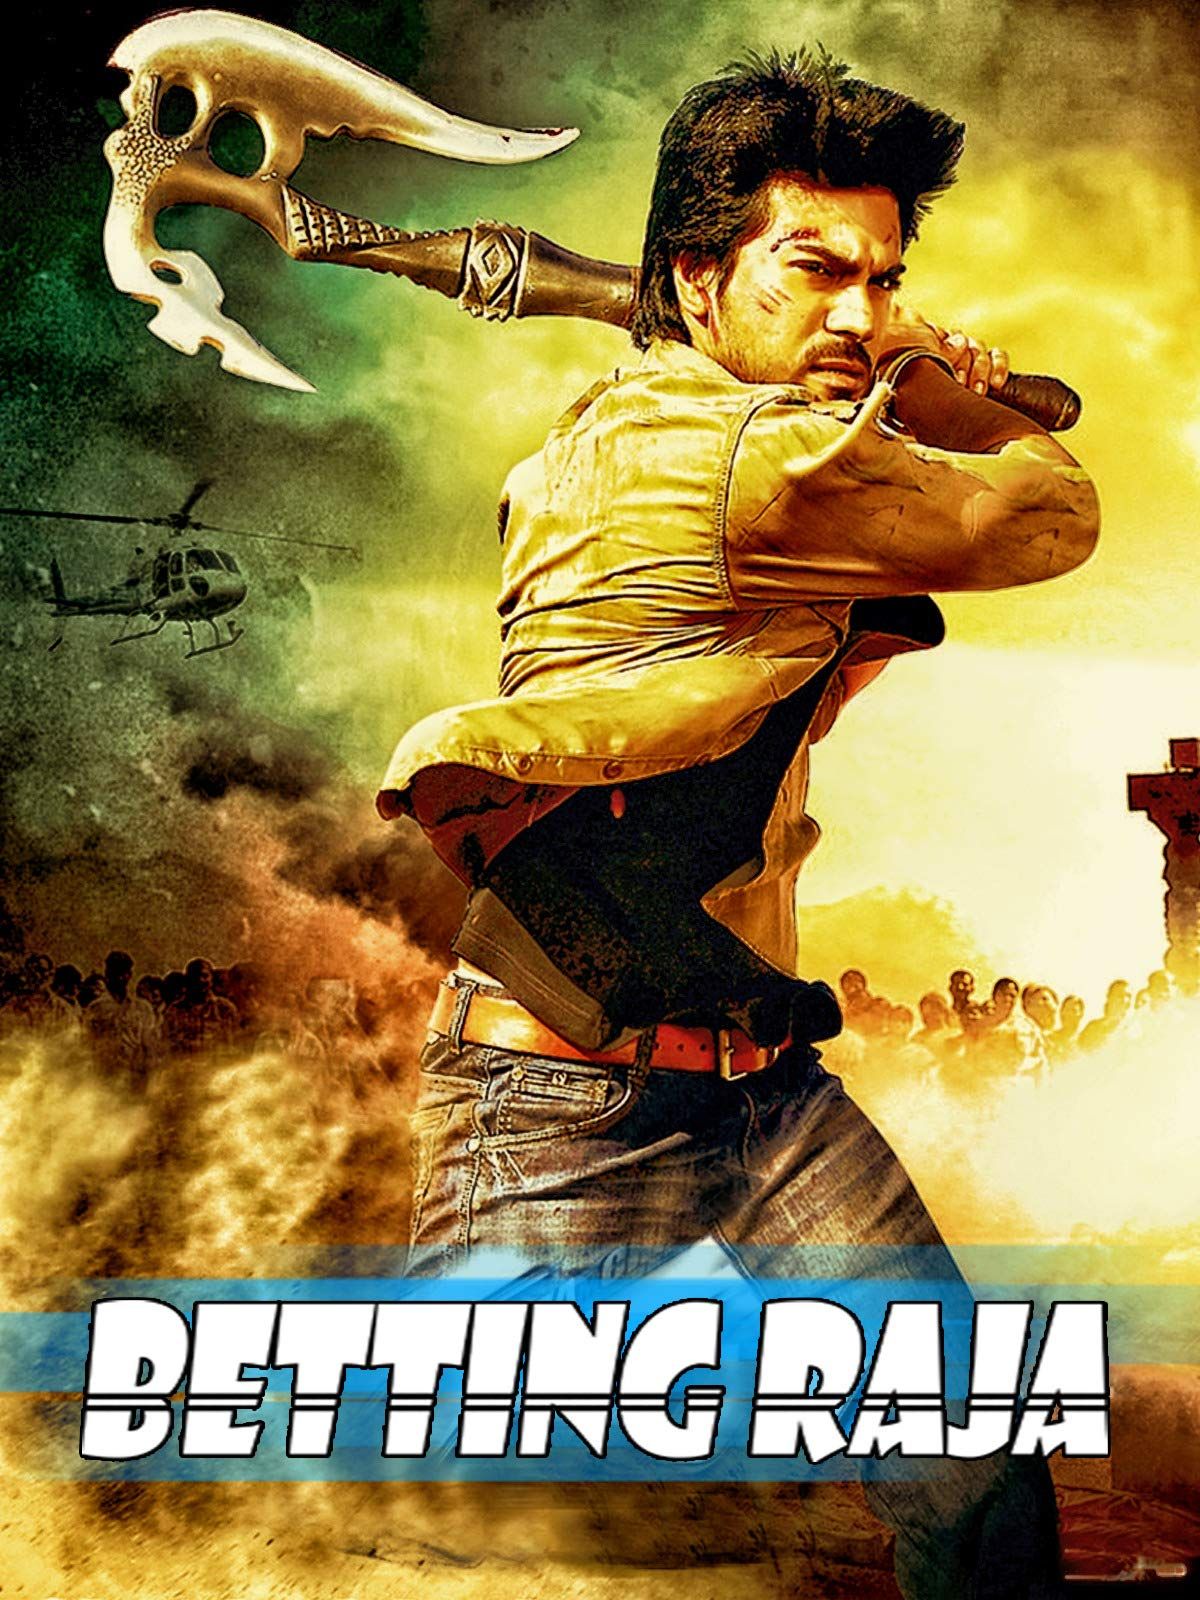 Betting Raja - Rachcha (2012) Hindi Dubbed HDRip download full movie